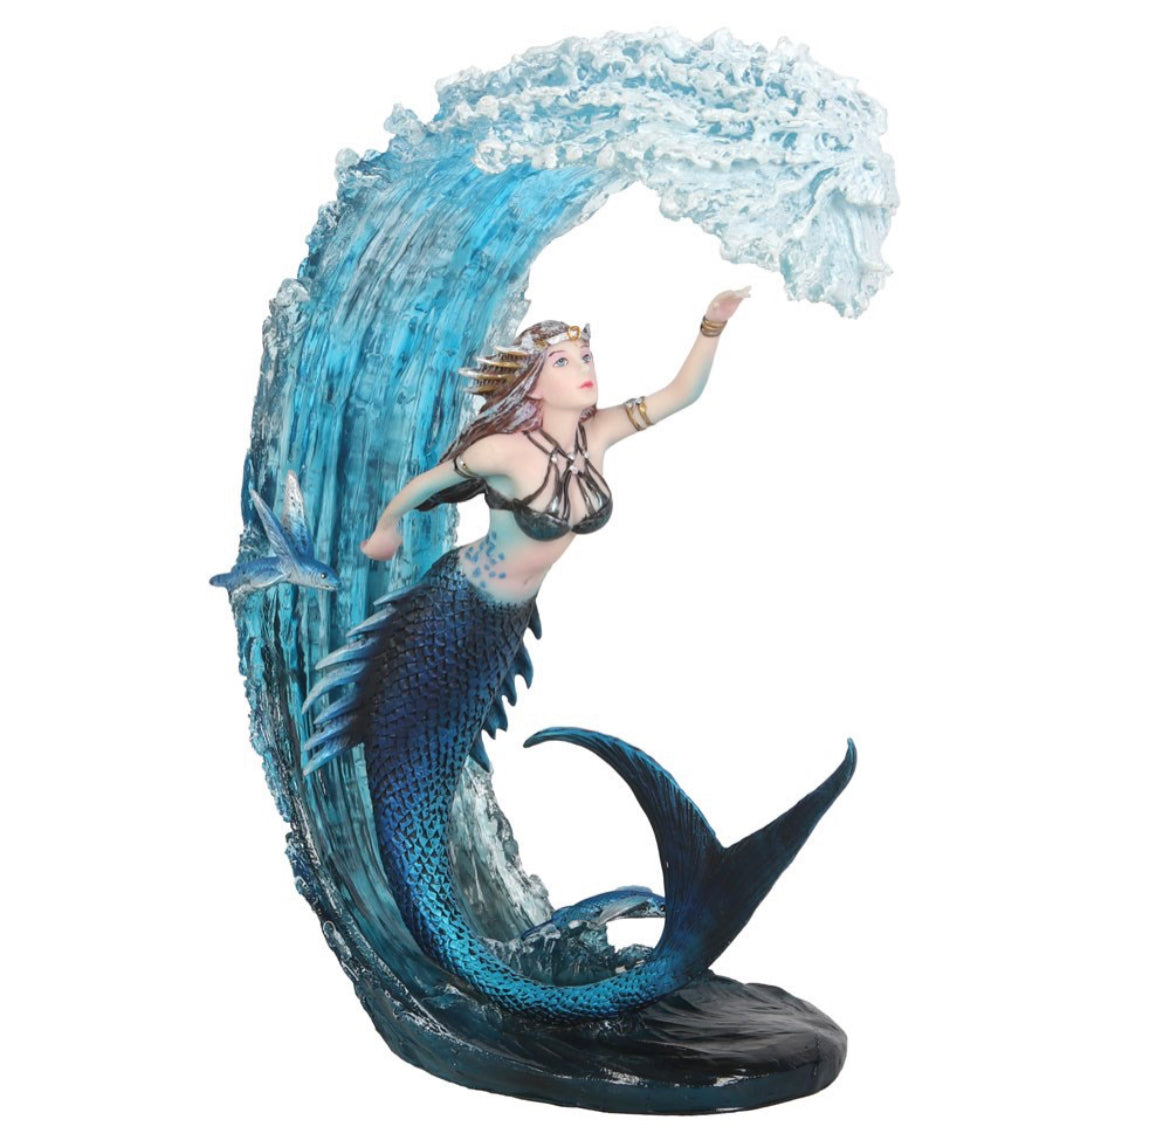 Water Elemental Sorceress Figurine